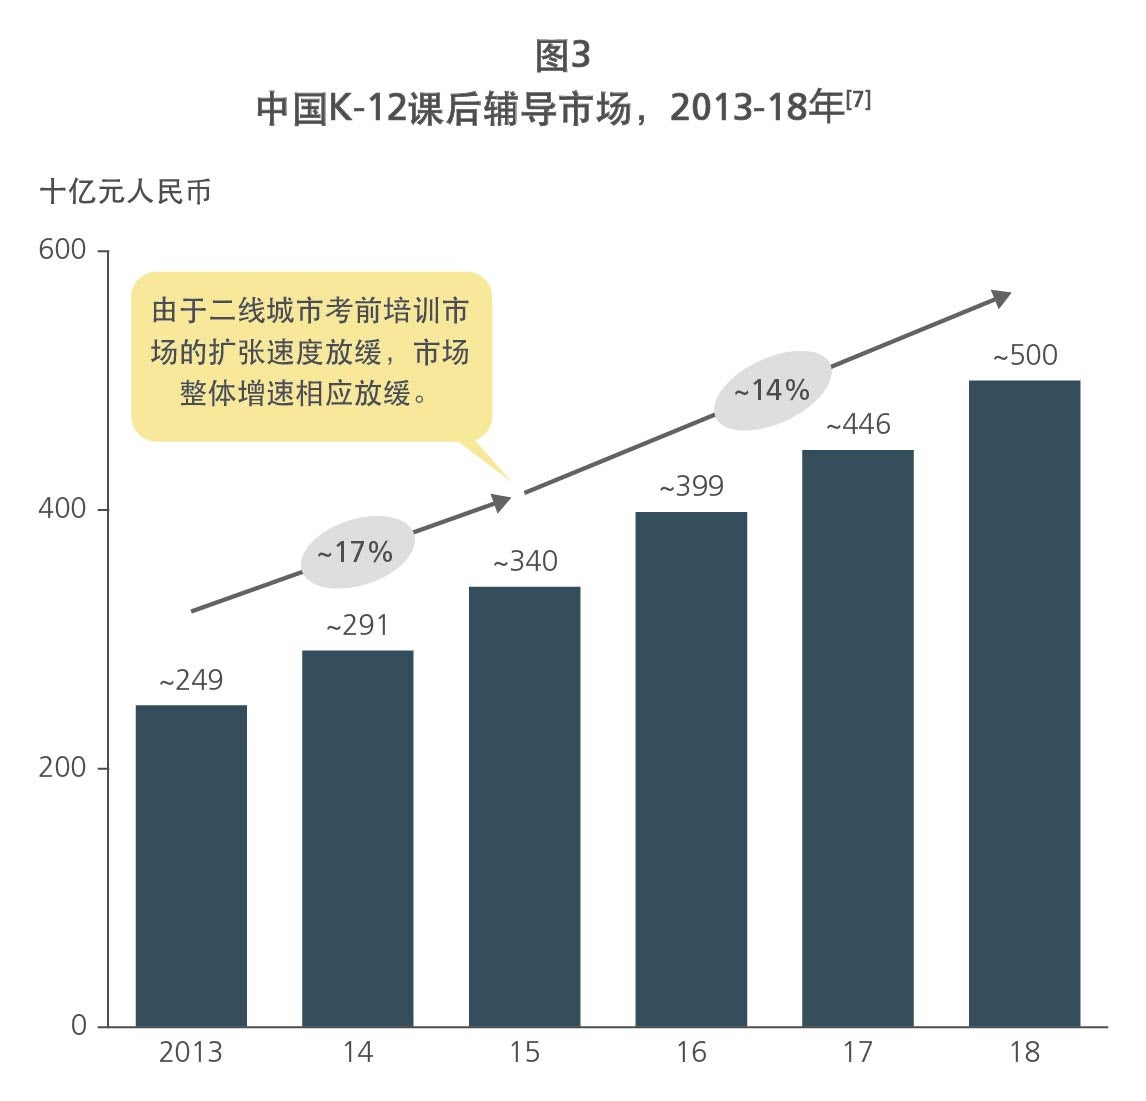 China K-12 after-school tutoring market 2013-18